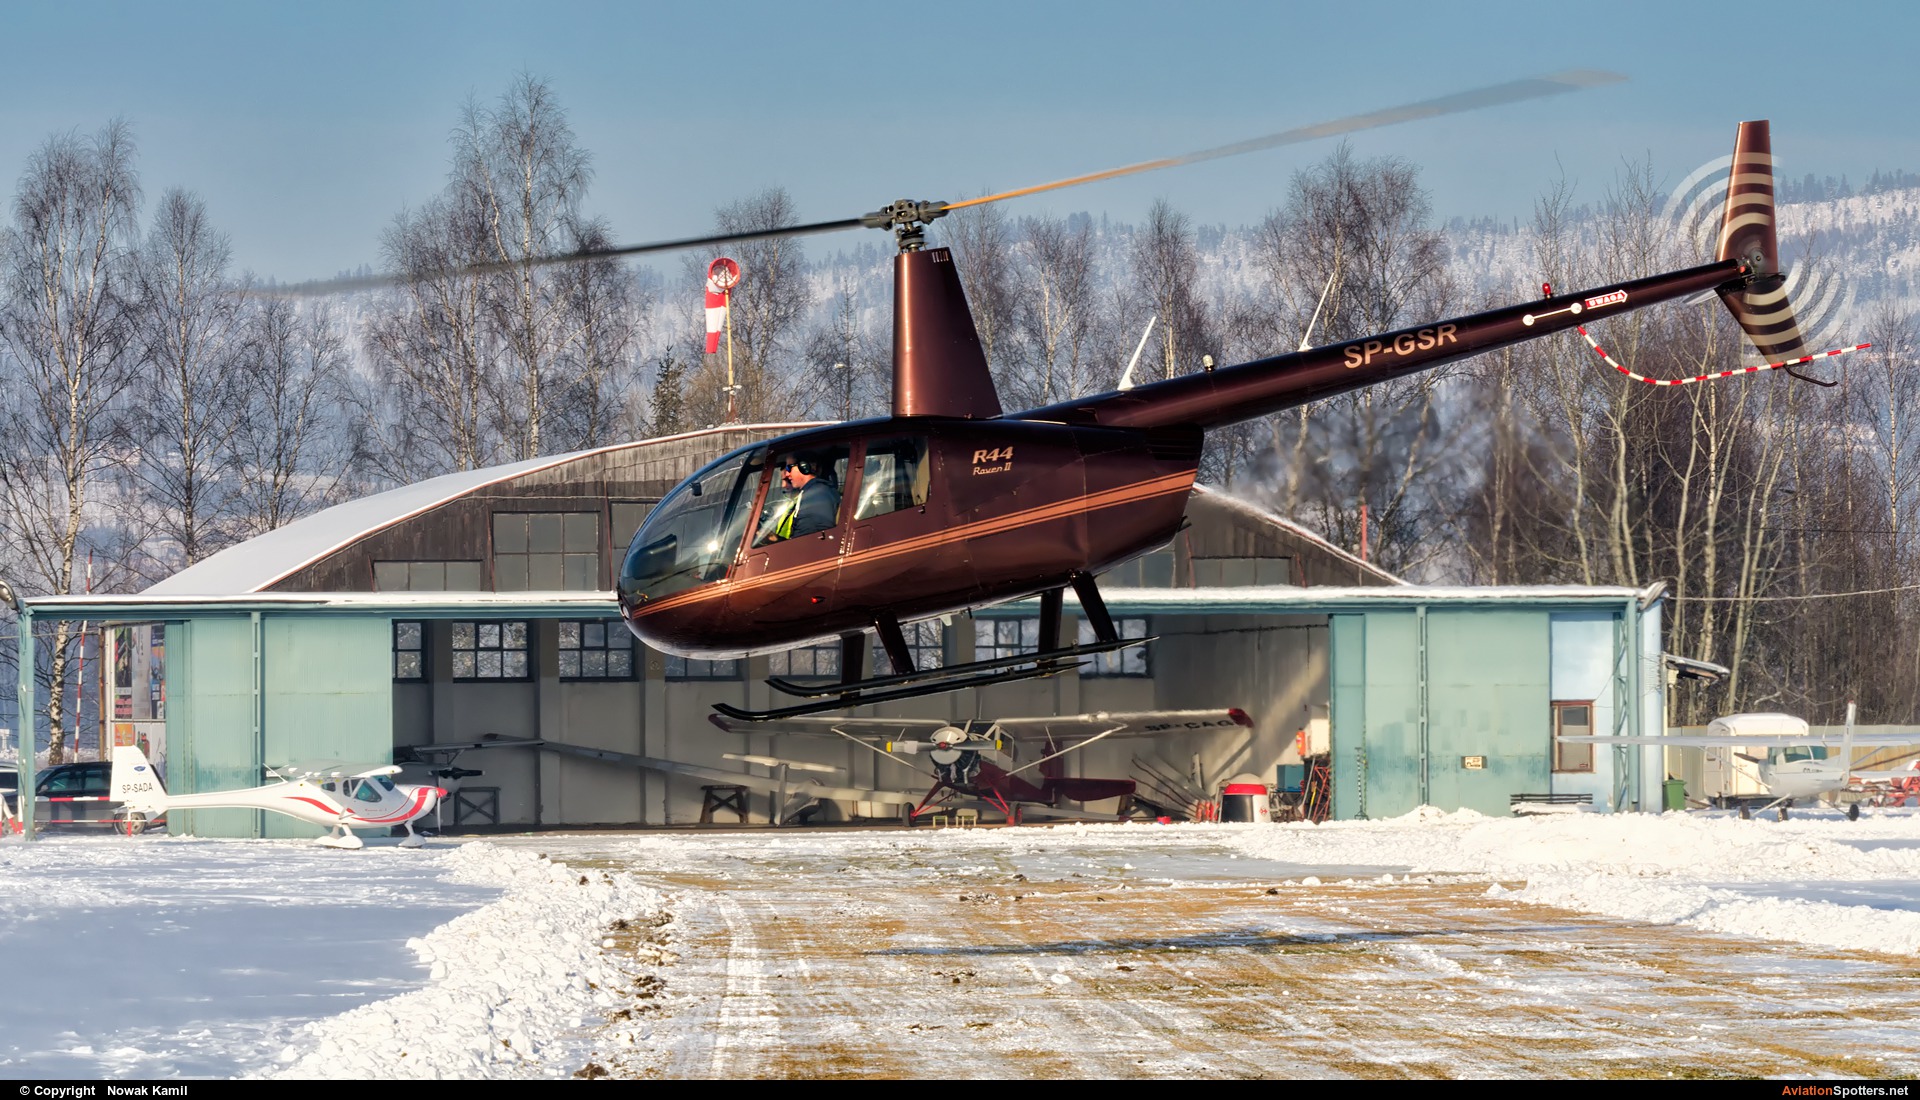 Private  -  R44 Astro - Raven  (SP-GSR) By Nowak Kamil (kretek)